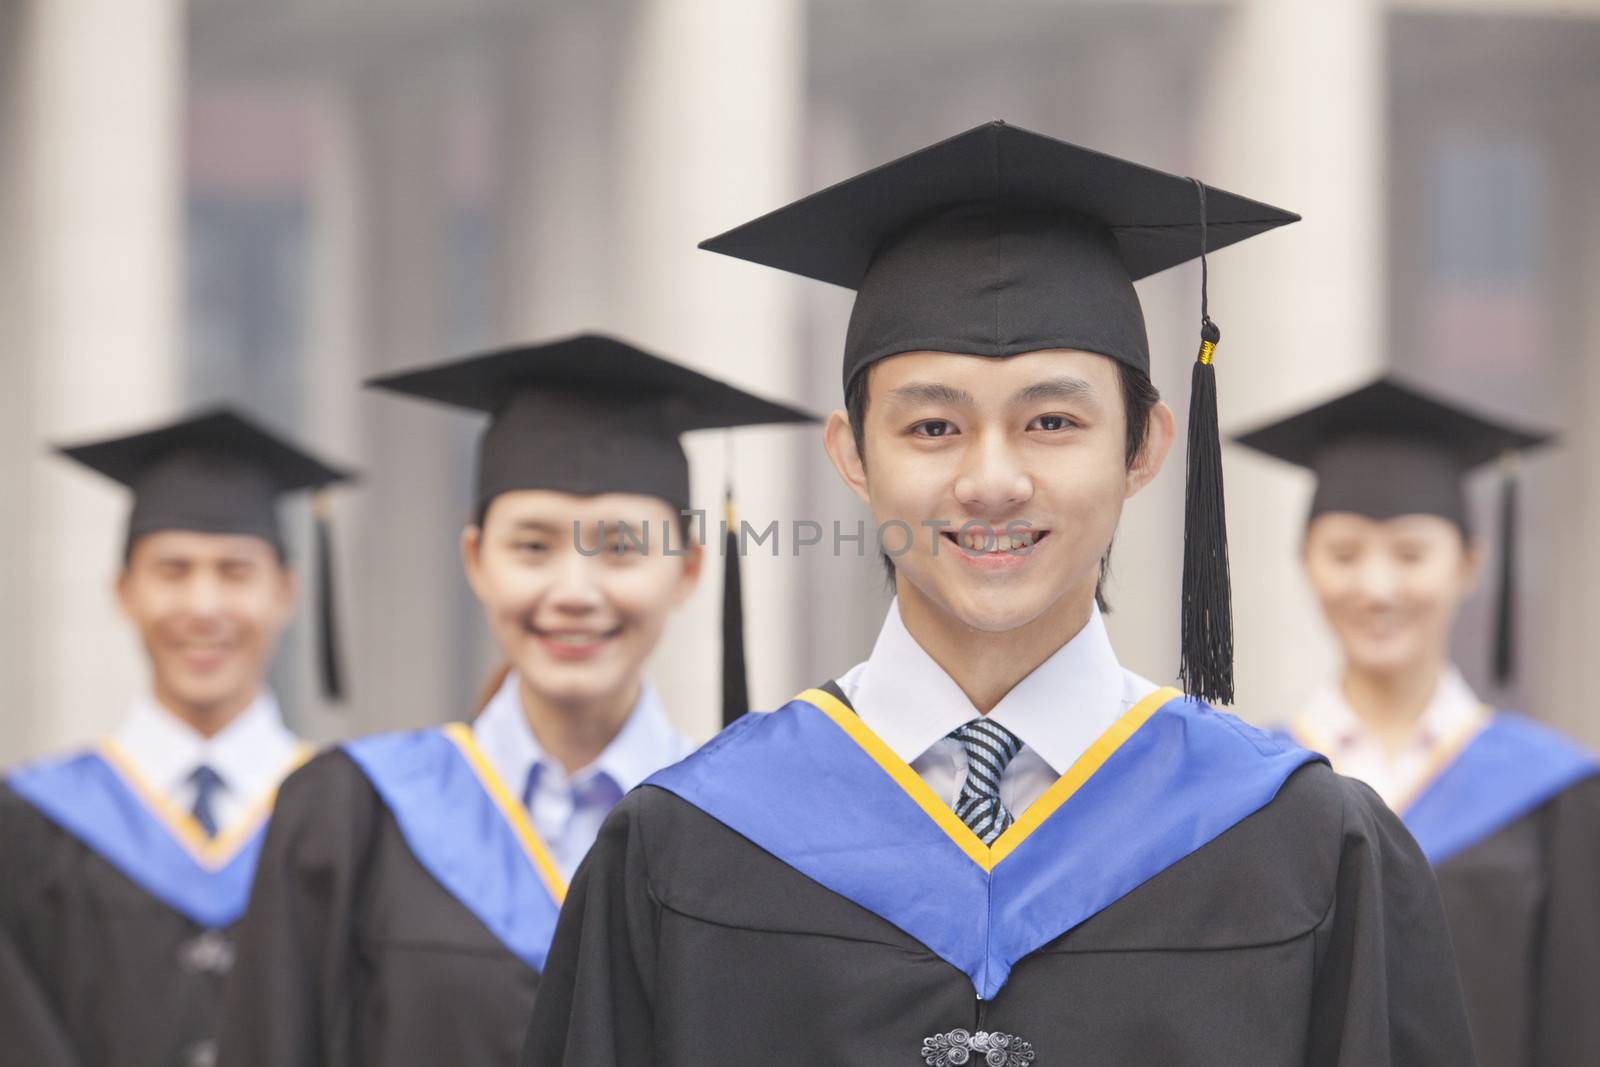  Four University Graduates Smiling, Looking at Camera by XiXinXing